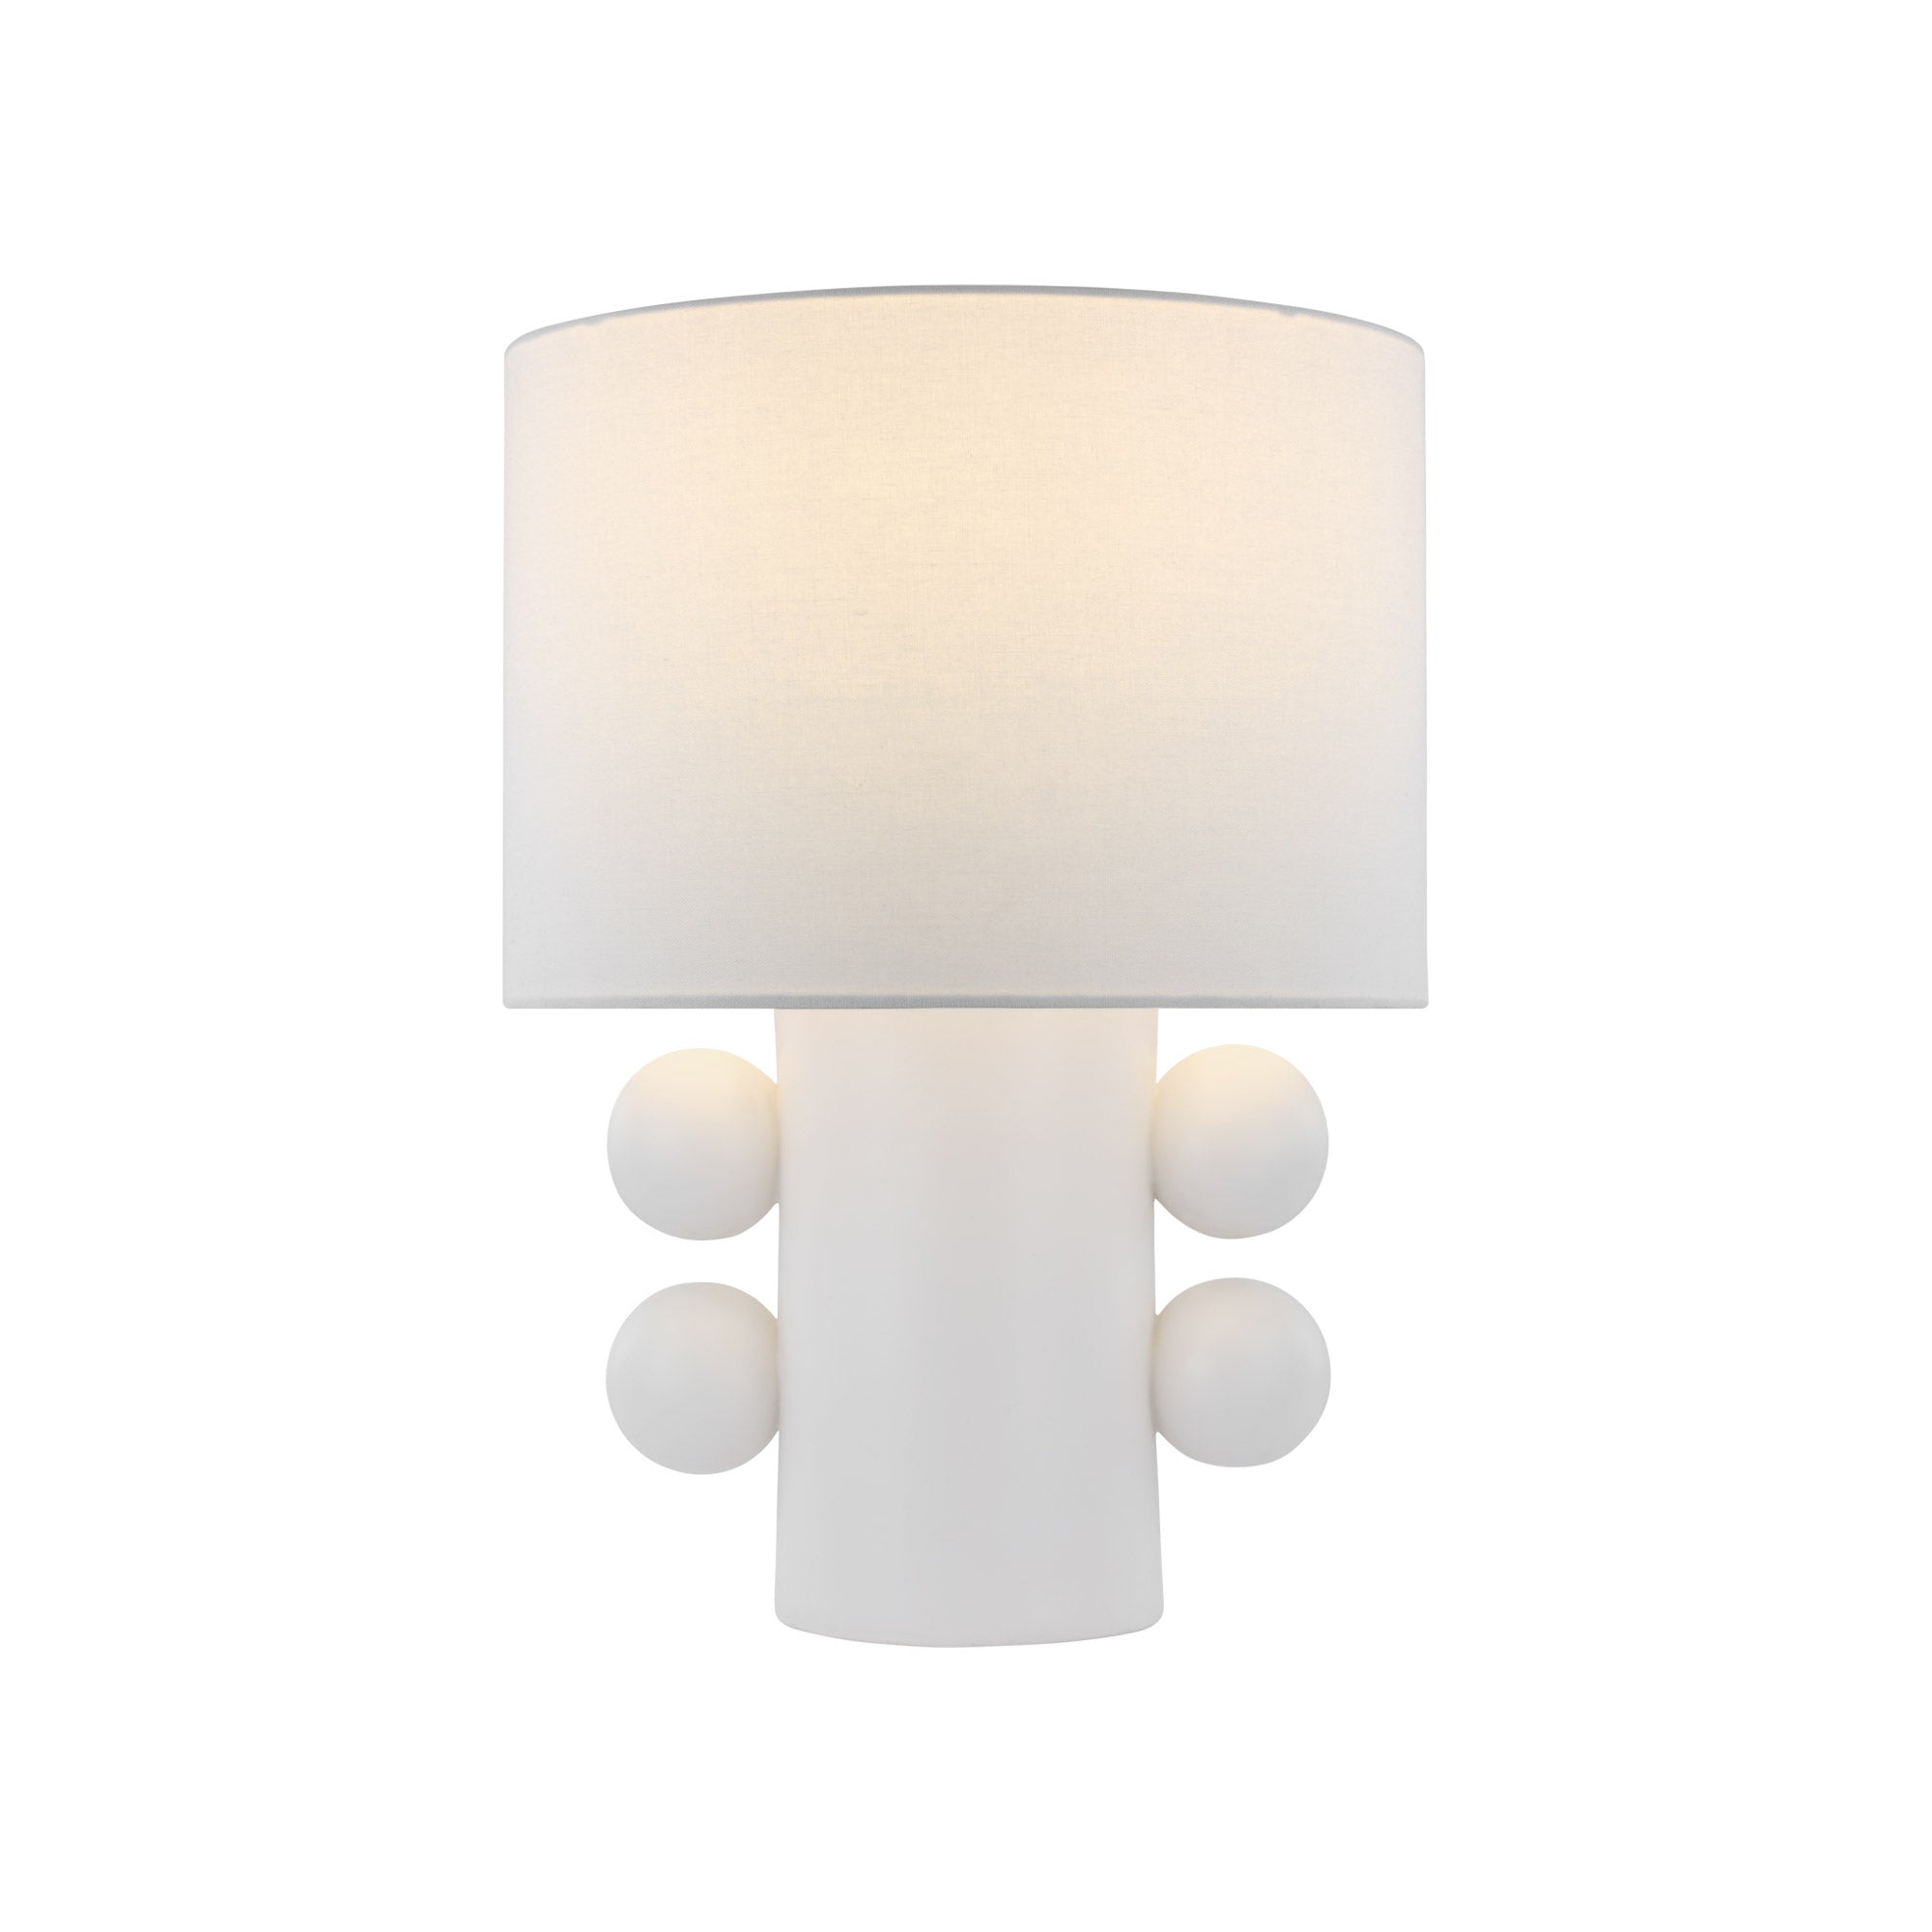 Kelly Wearstler Tiglia Small Table Lamp